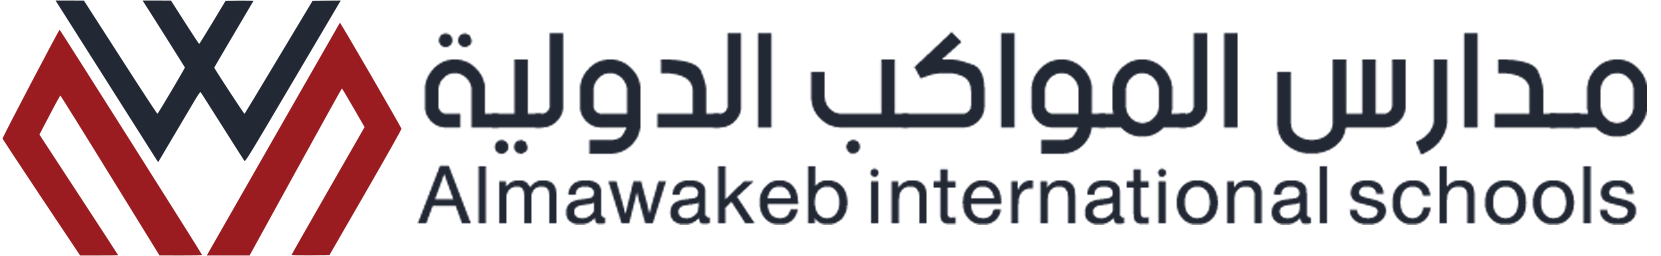 Mawakeb International School